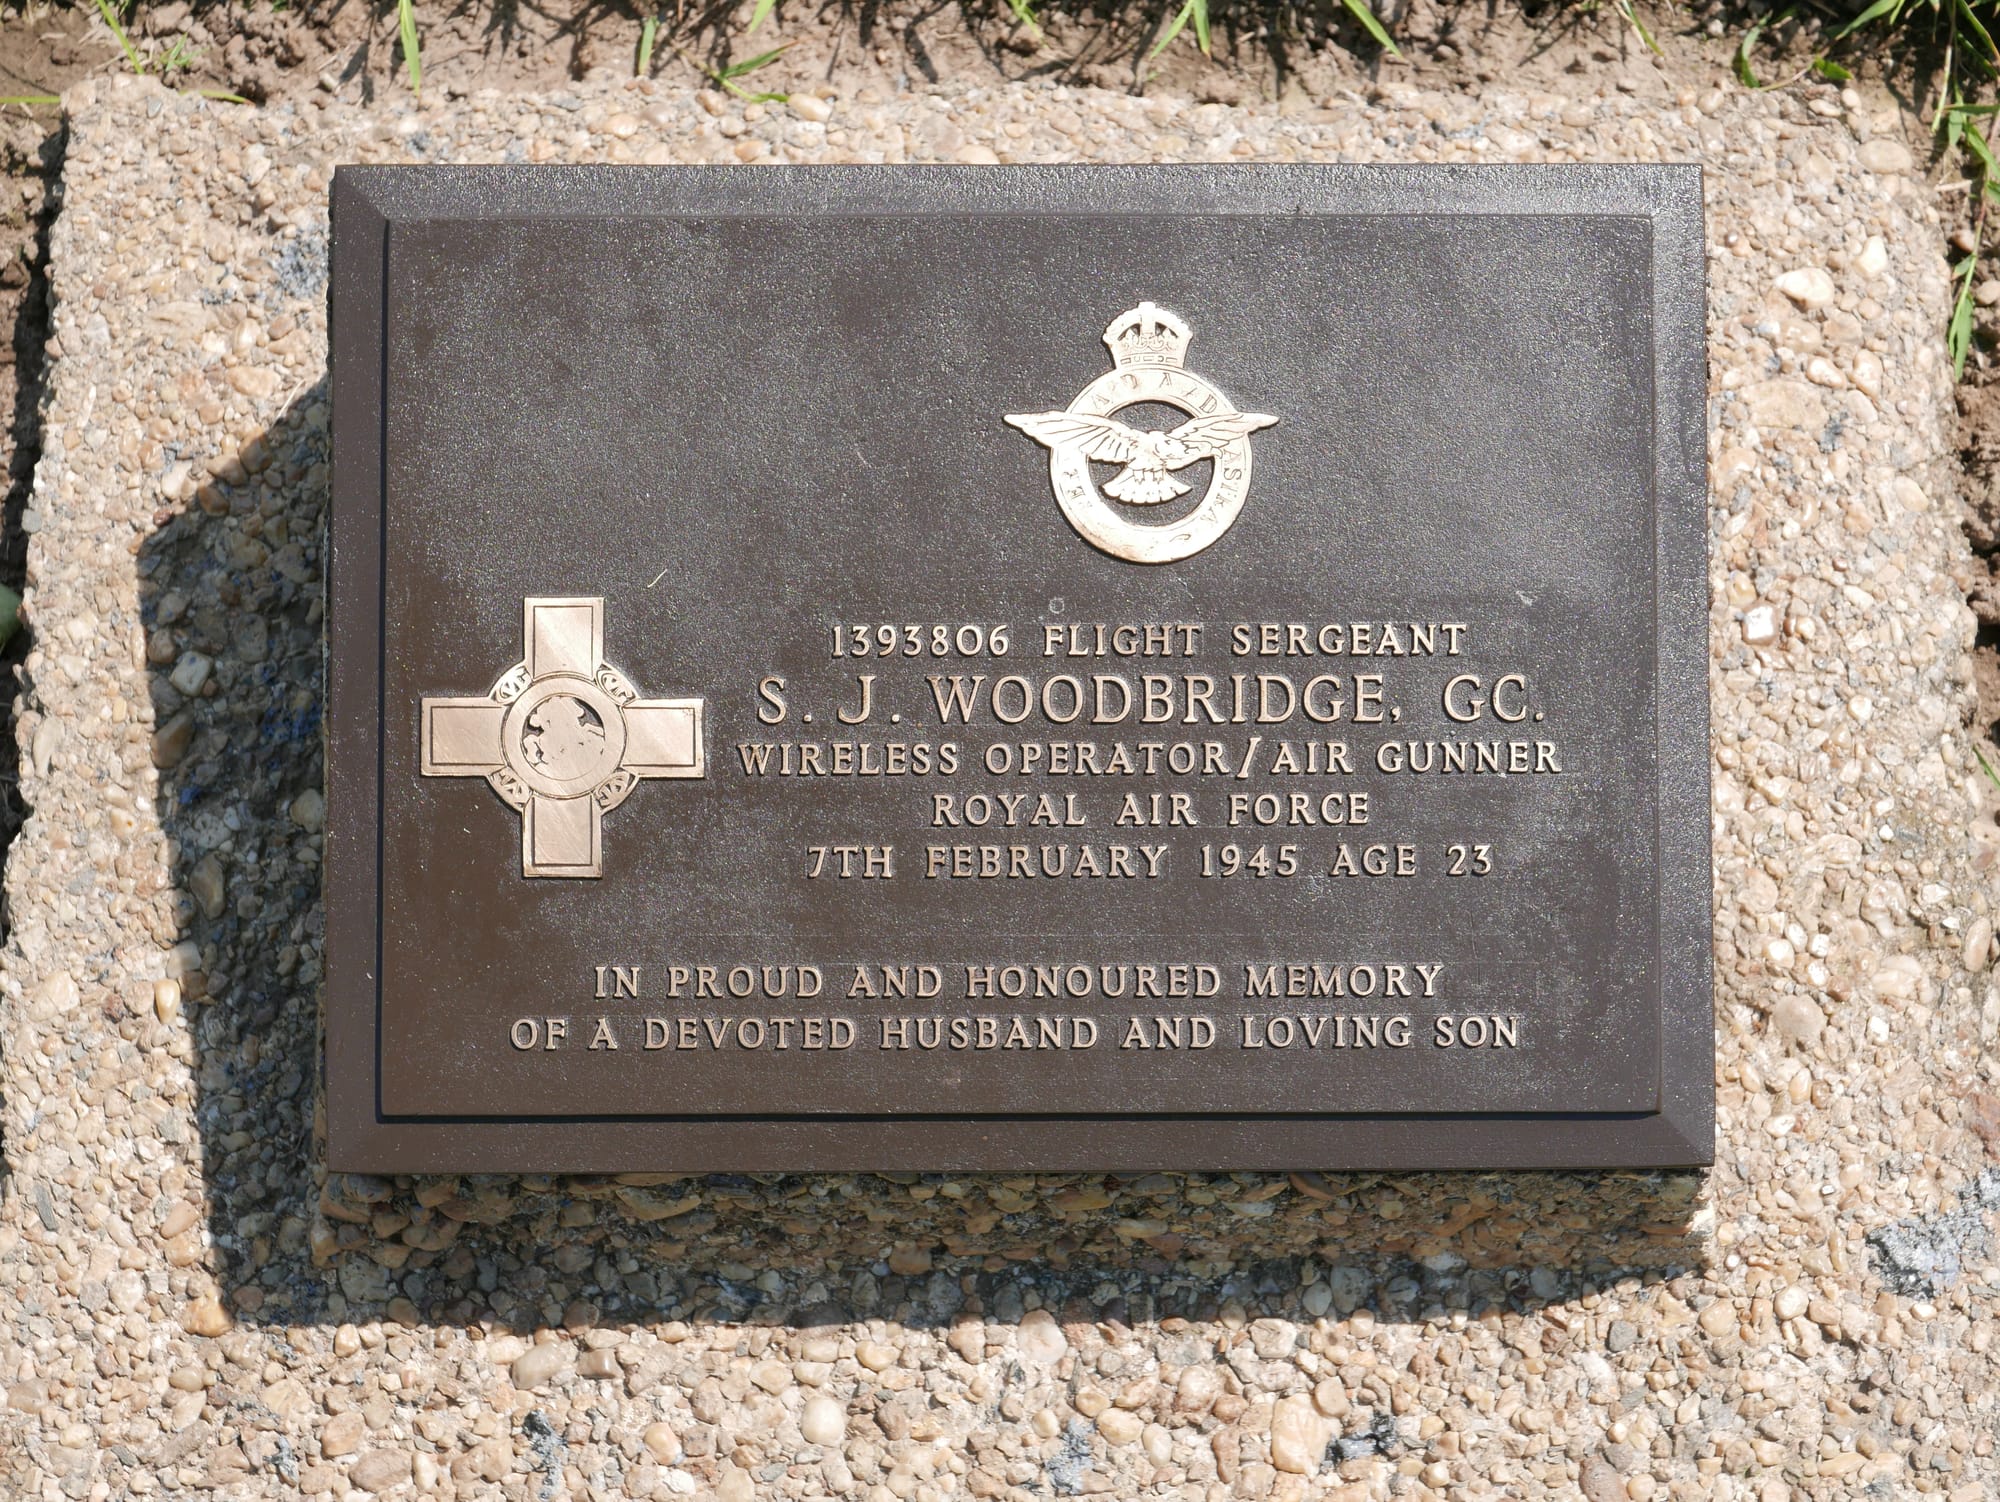 Photo by Author — the grave marker of Flight Sergeant S.J. Woodbridge GC